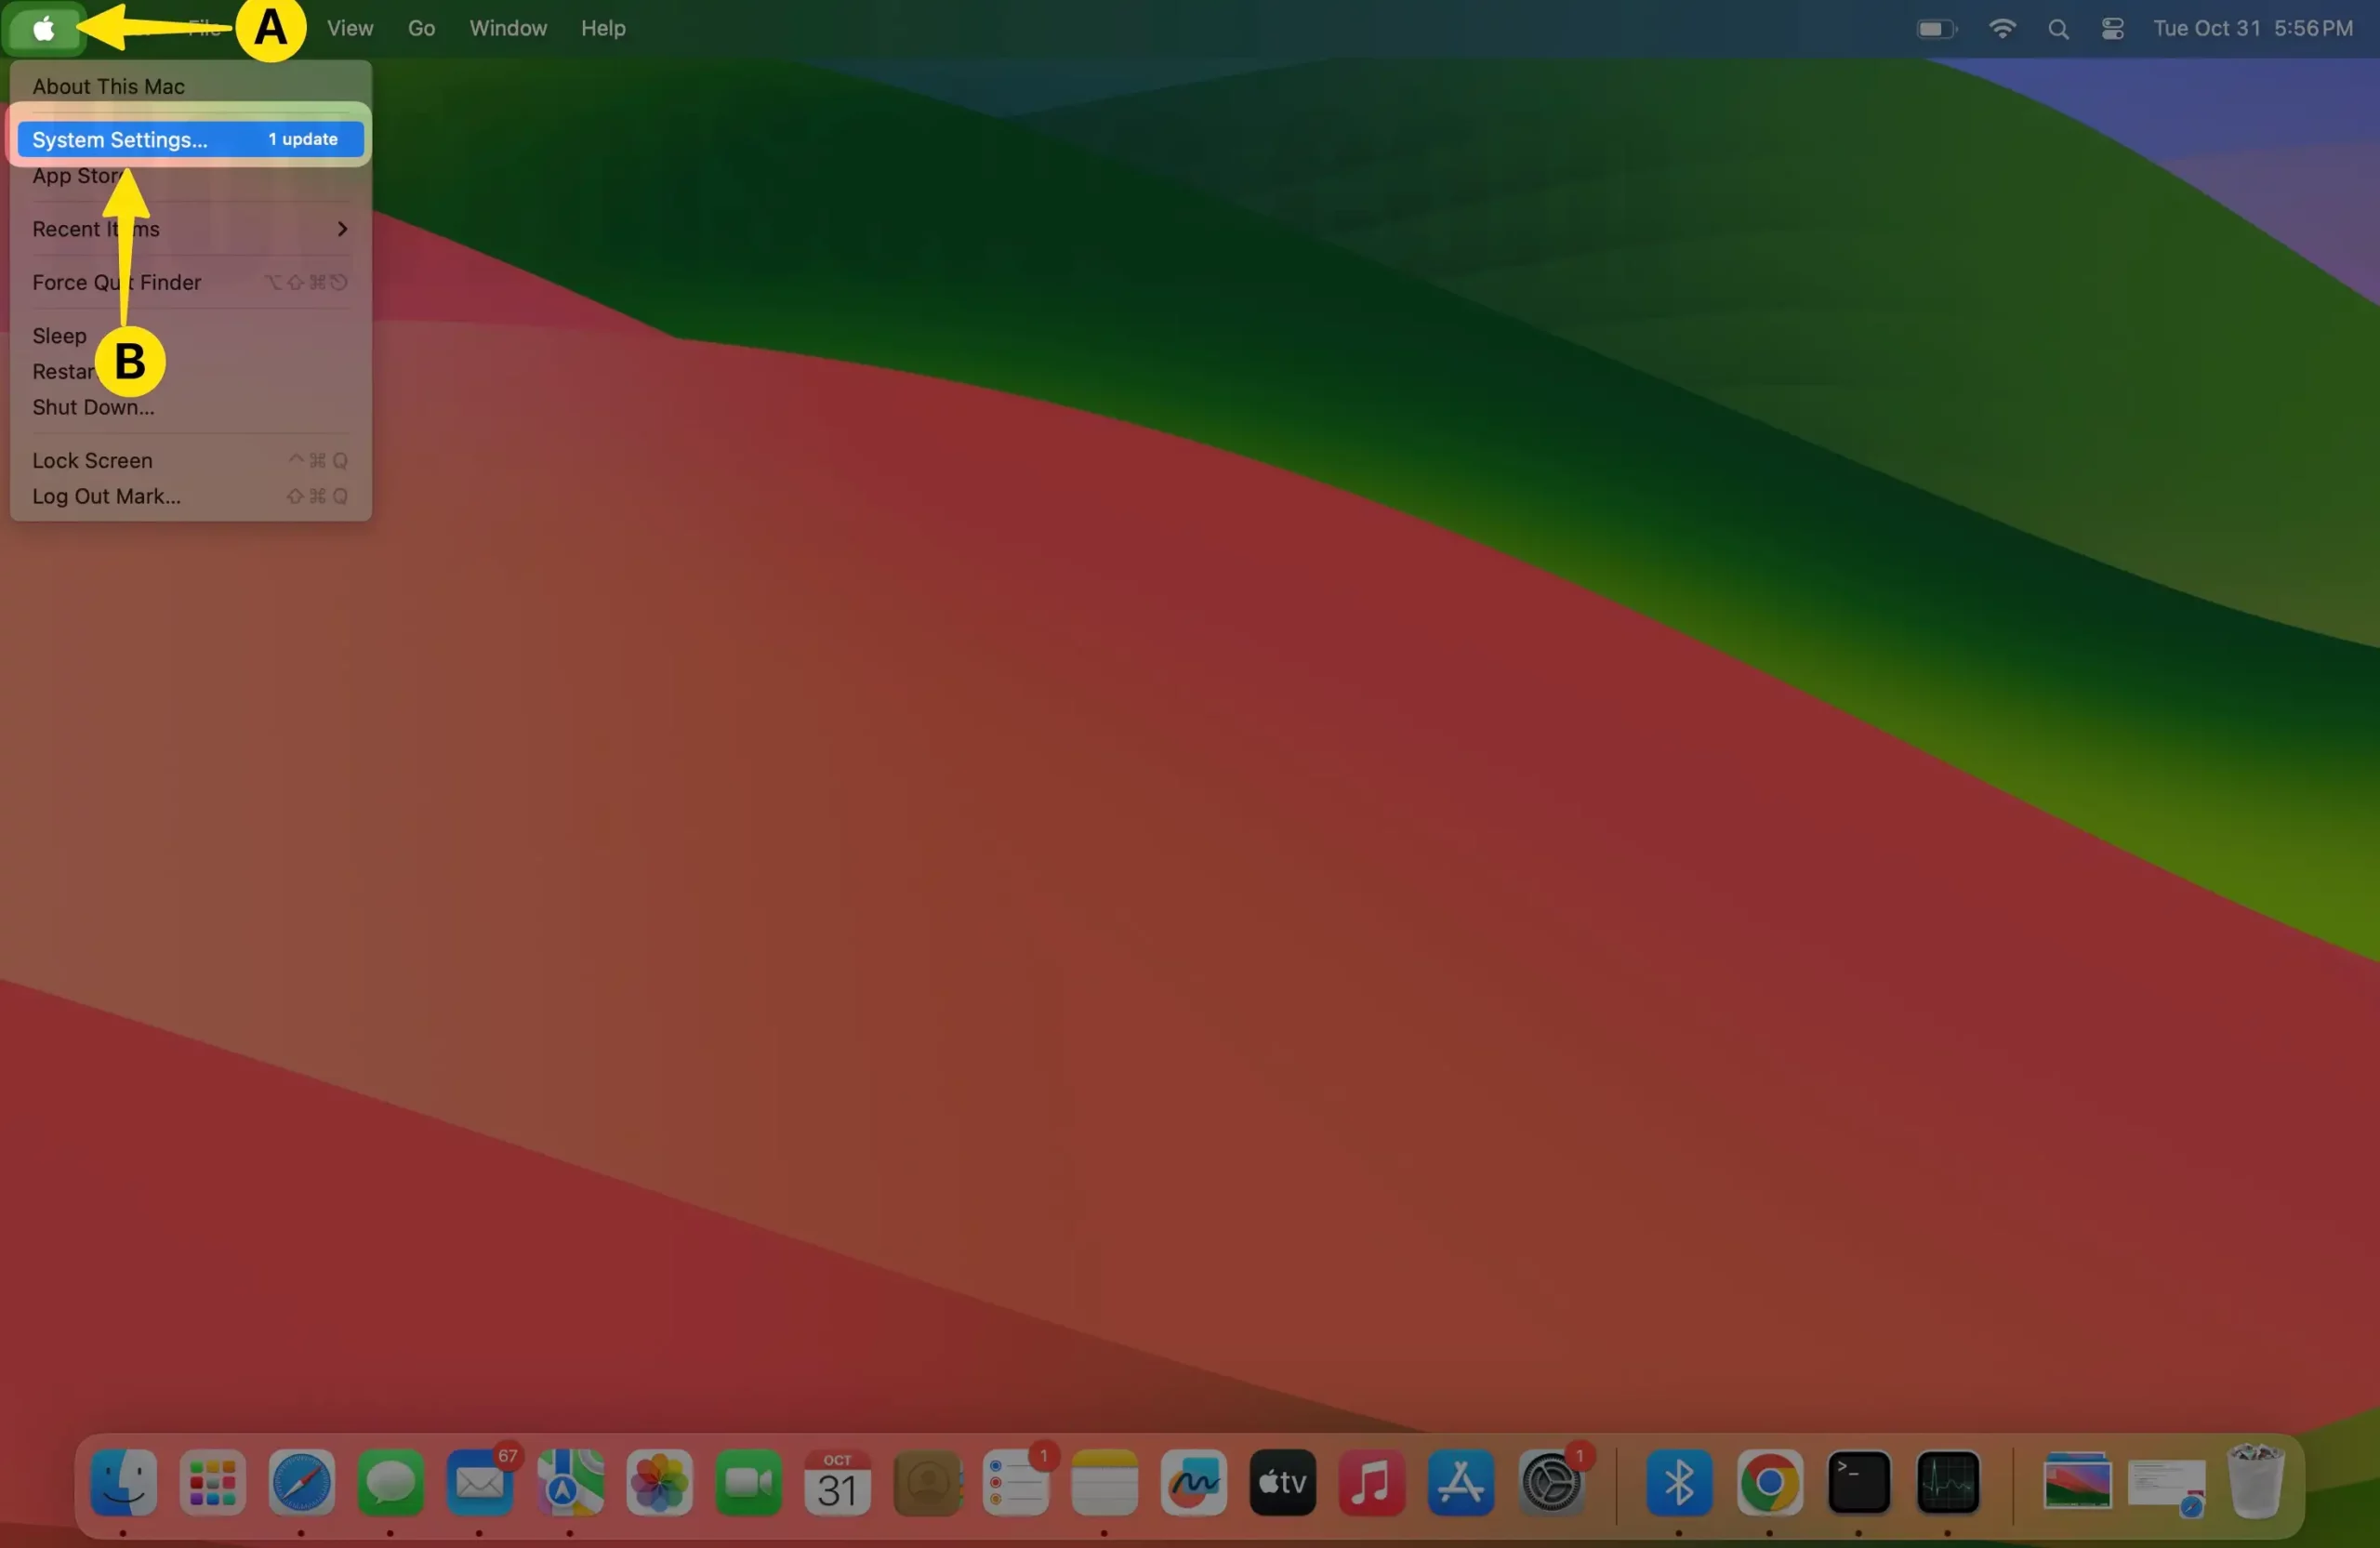 Open Apple Menu Select System Setting On Mac